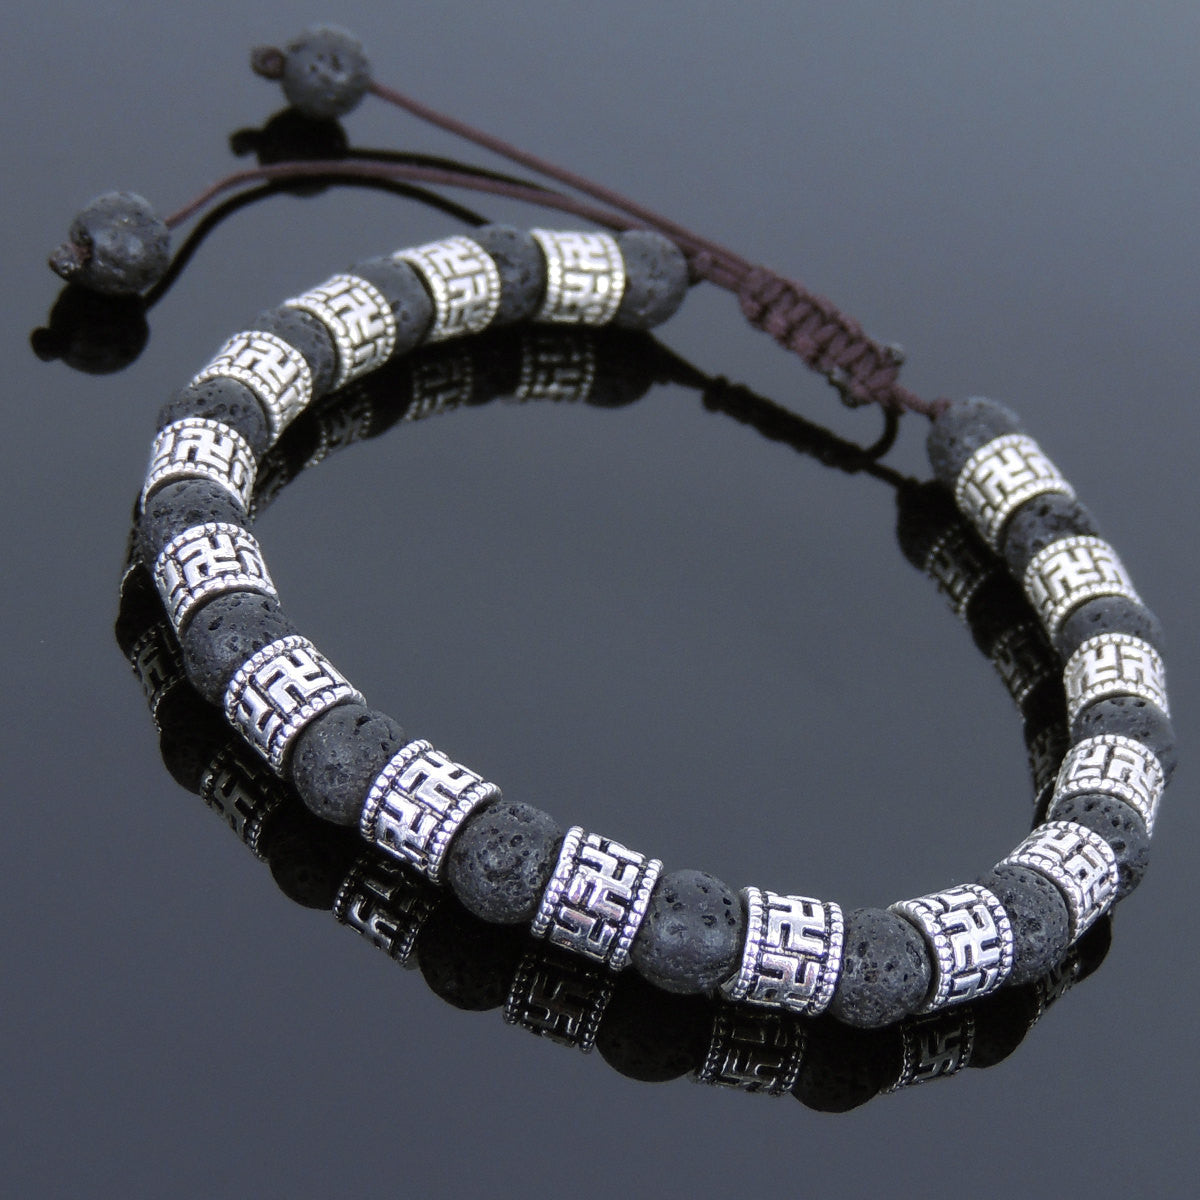 6mm Lava Rock Adjustable Braided Stone Bracelet with Tibetan Silver Buddhism Barrel Beads - Handmade by Gem & Silver TSB244